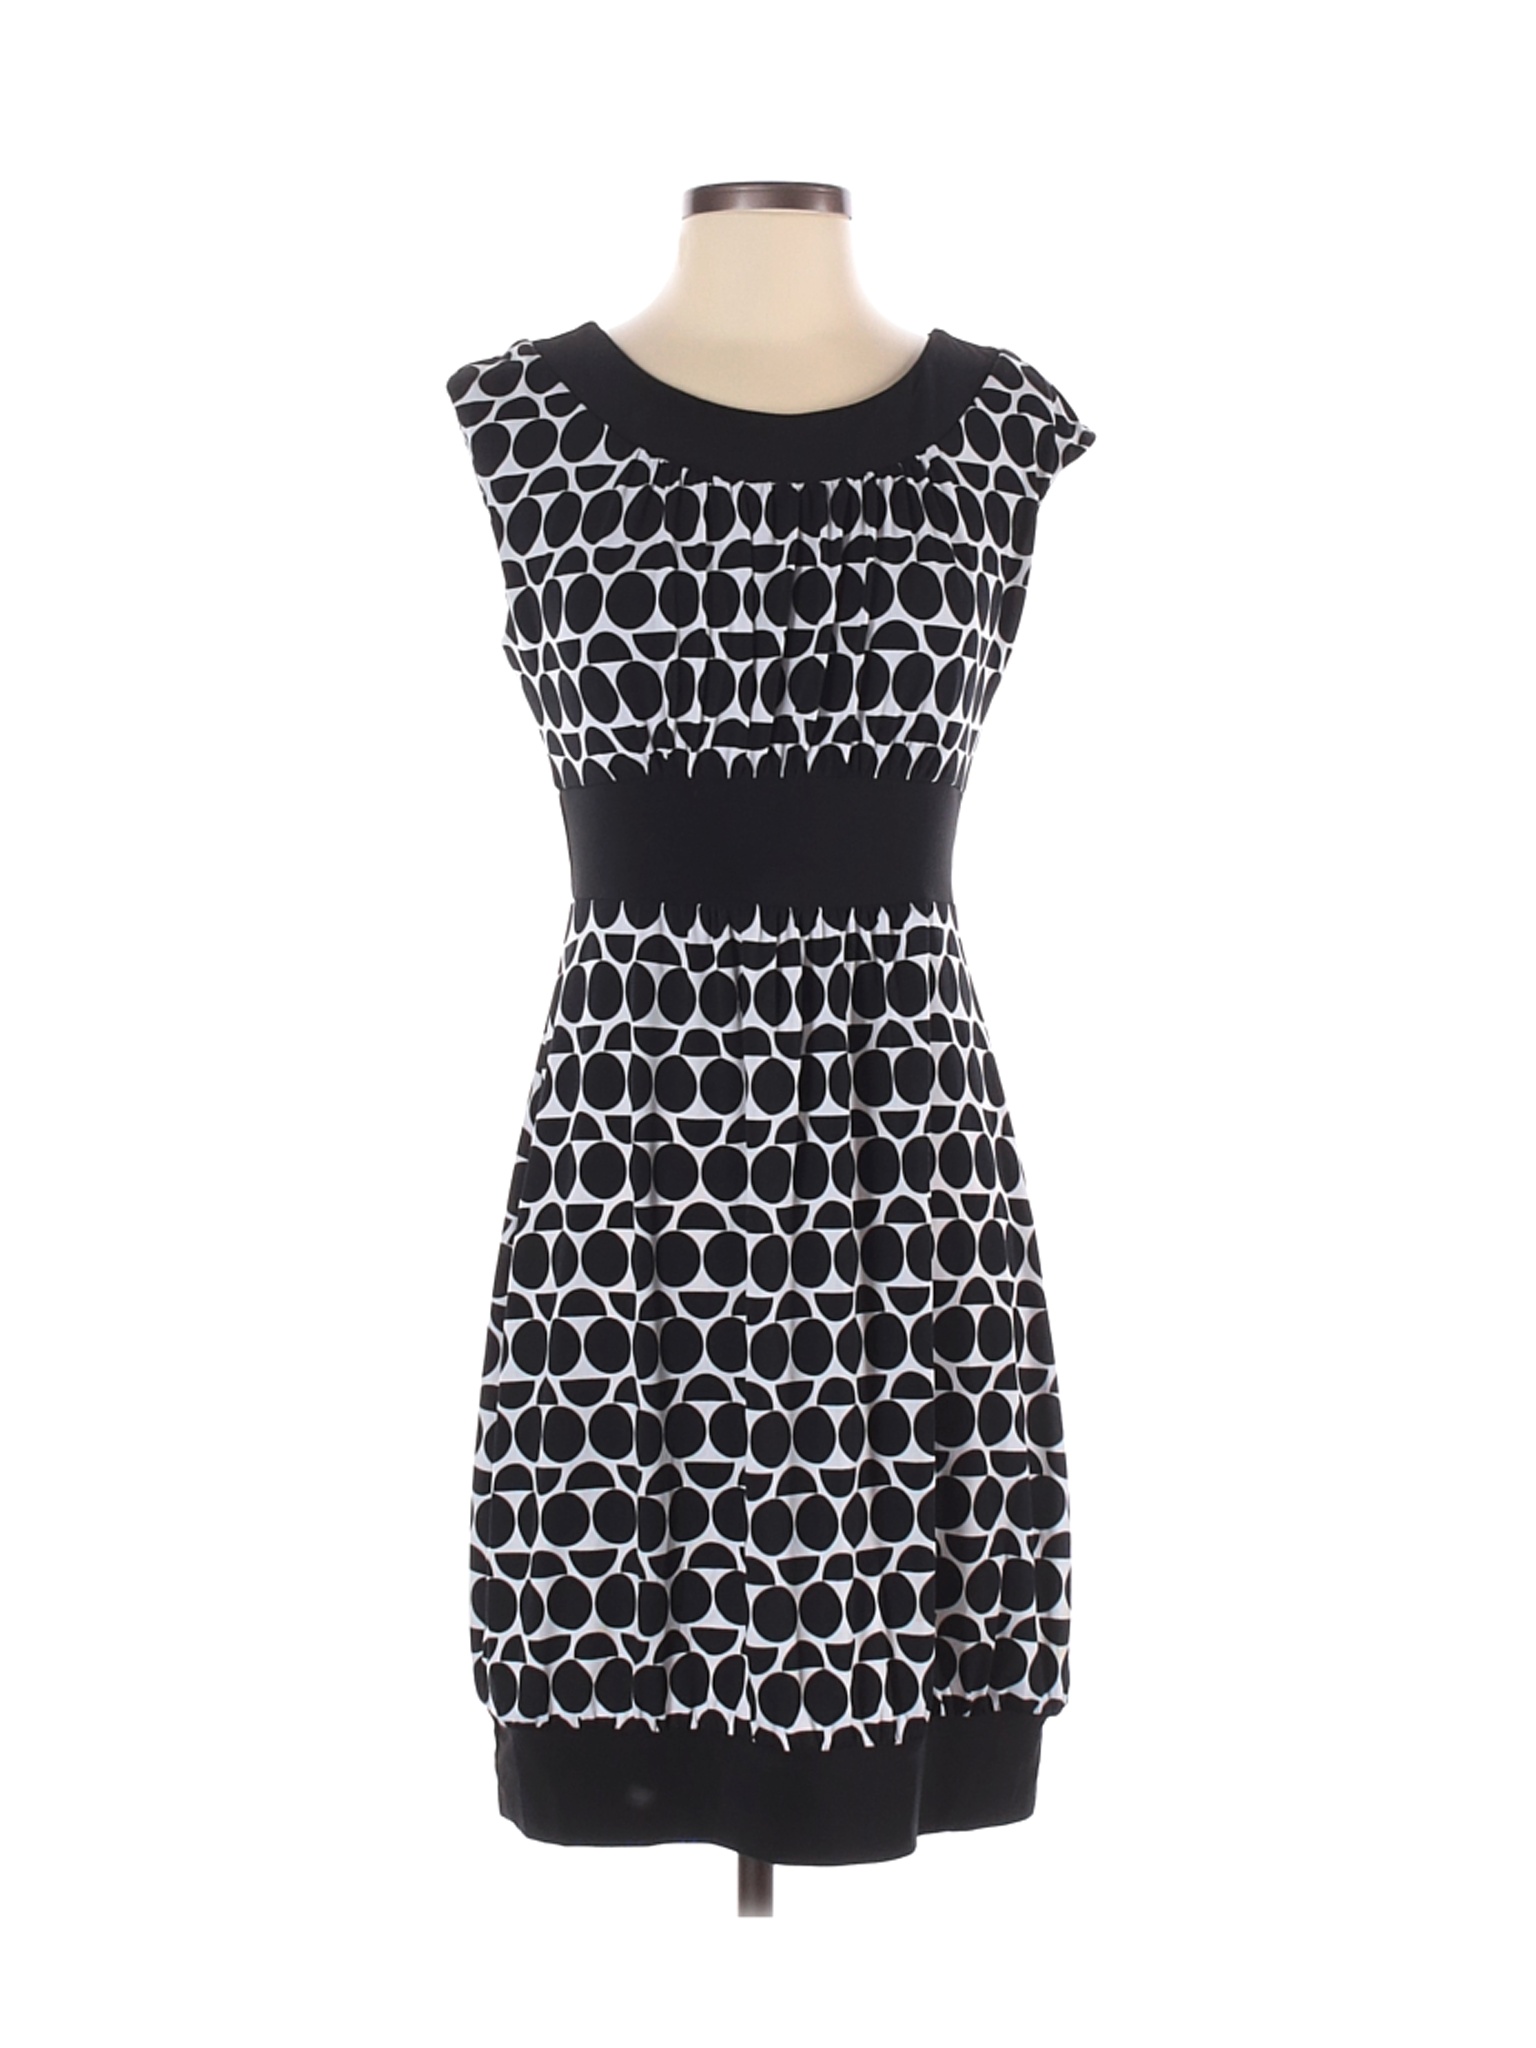 White House Black Market Women Black Casual Dress S | eBay